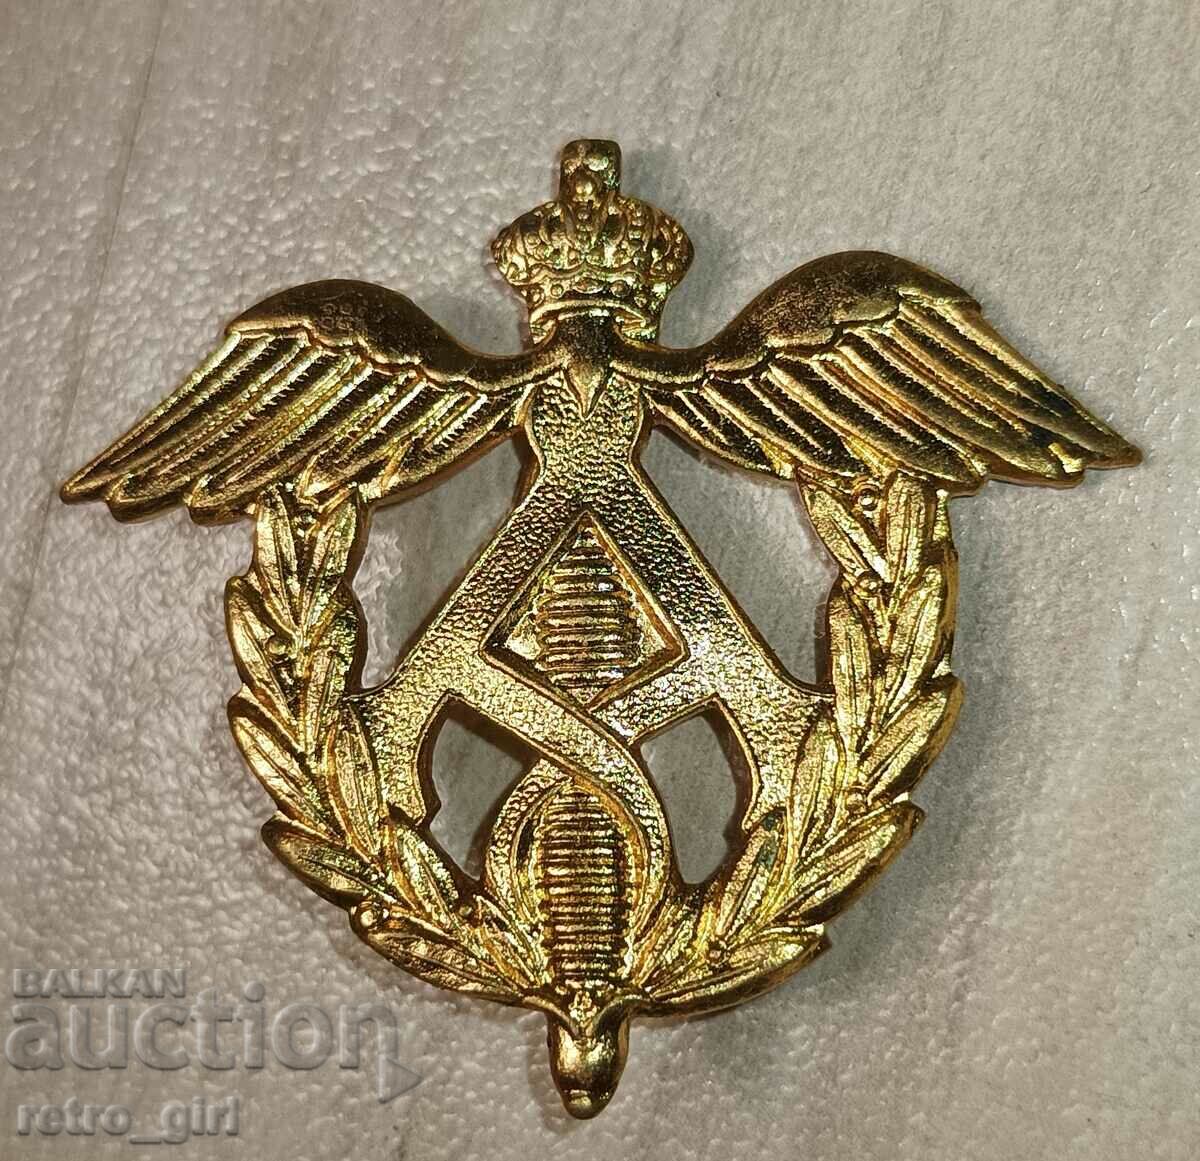 I am selling a military insignia, a badge